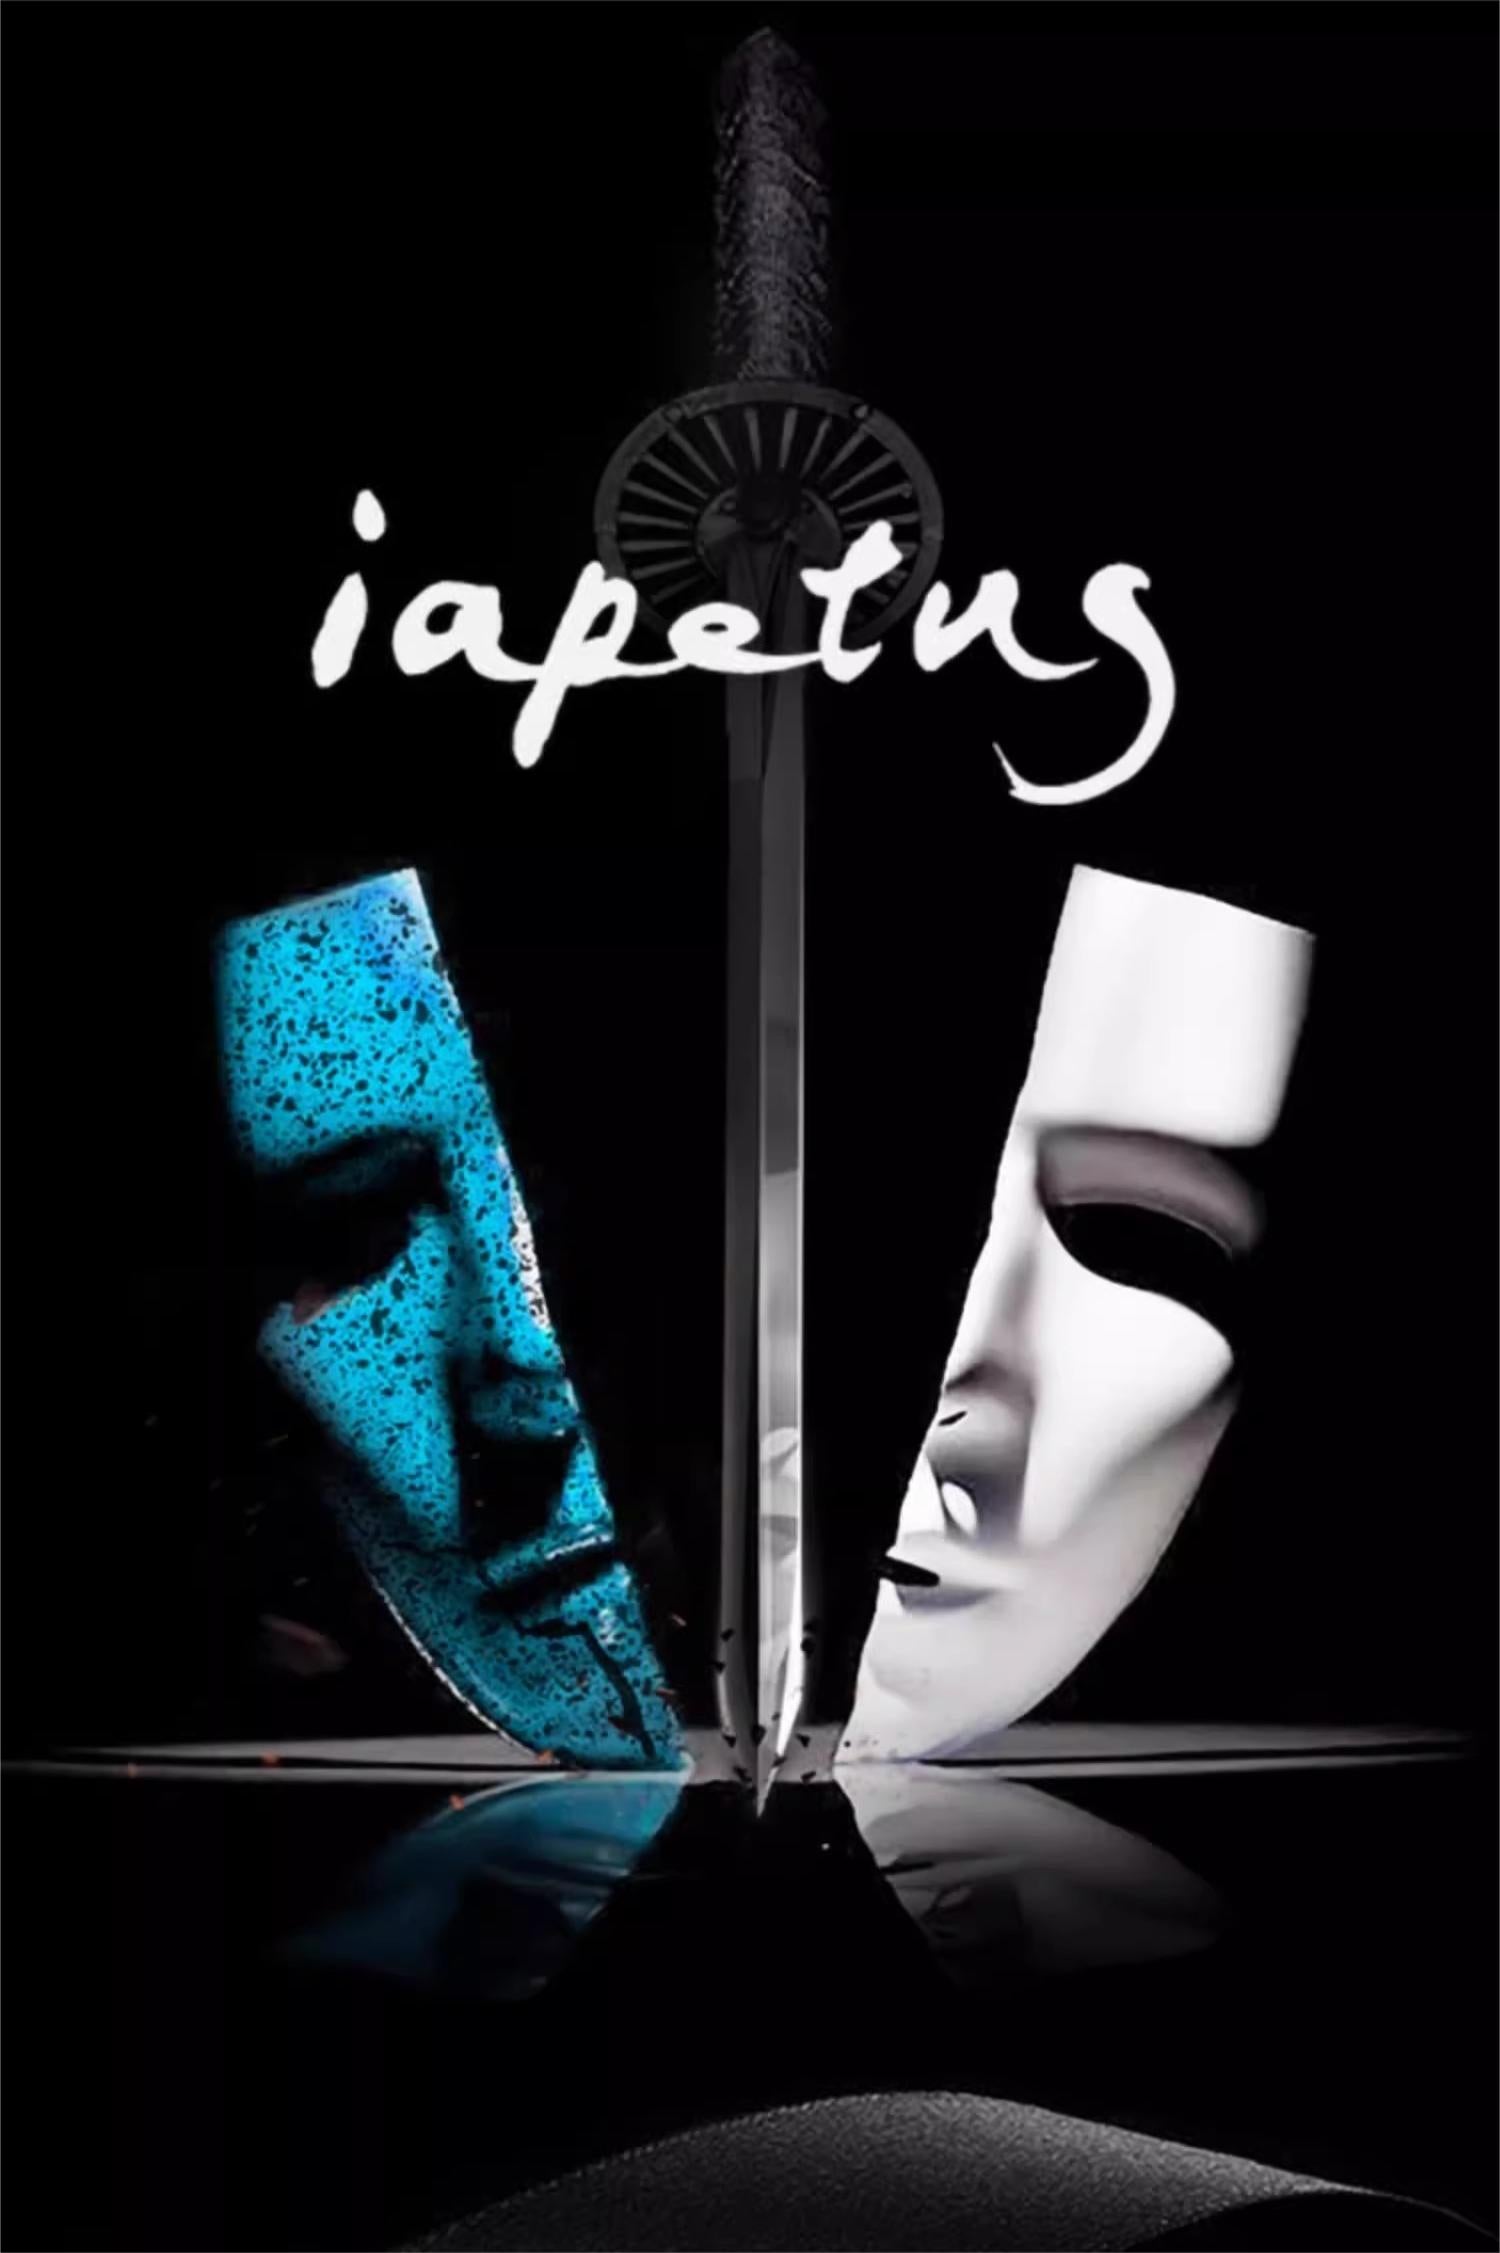 IAPETUS Black Off Mask